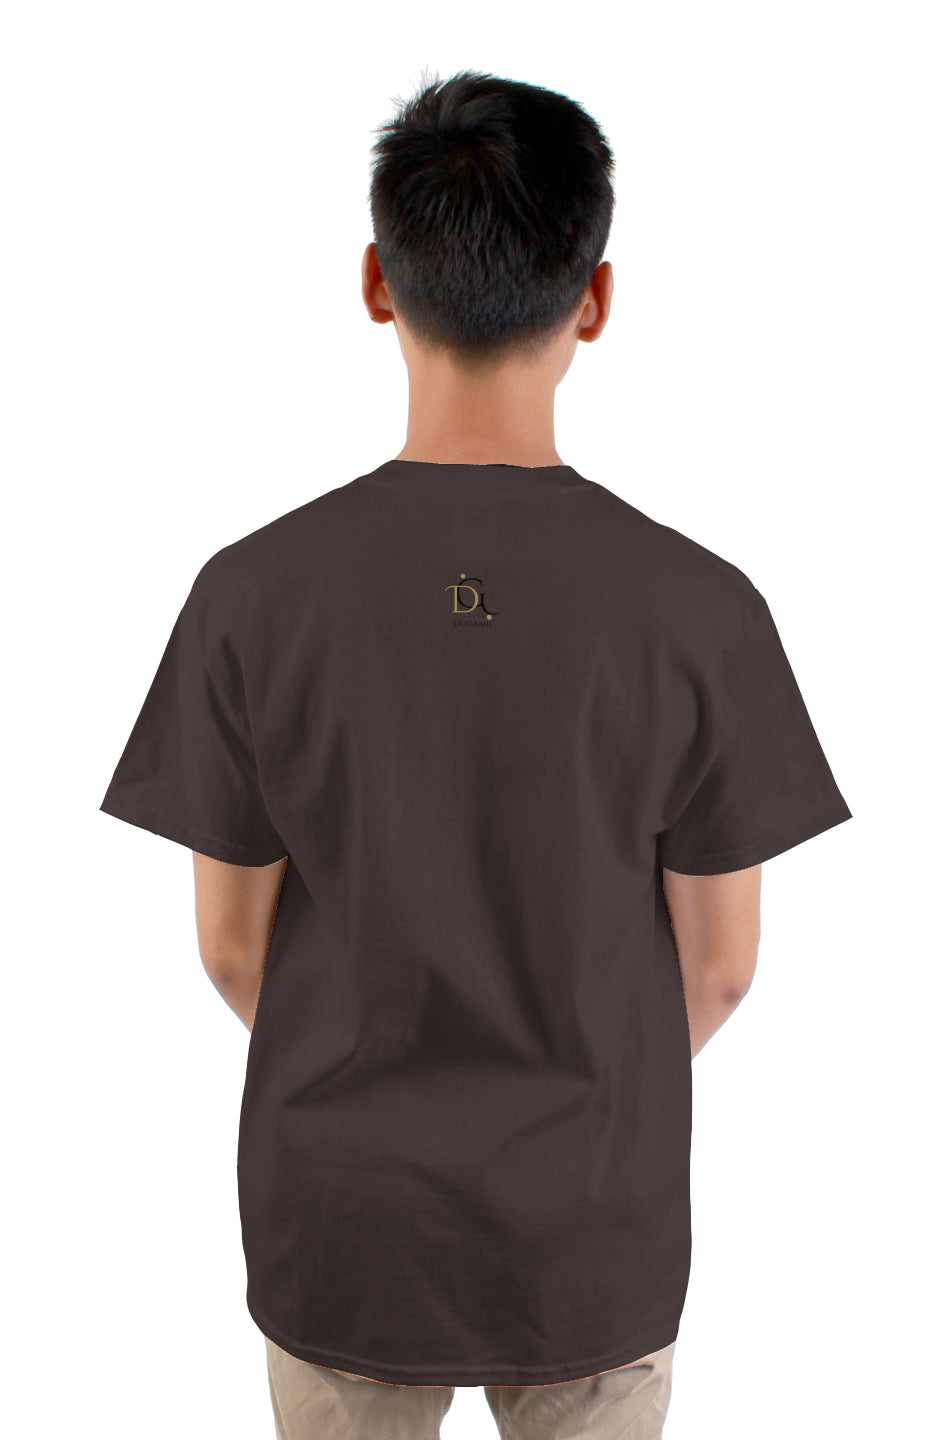 DuGamii Men's Gold Heart T-Shirt